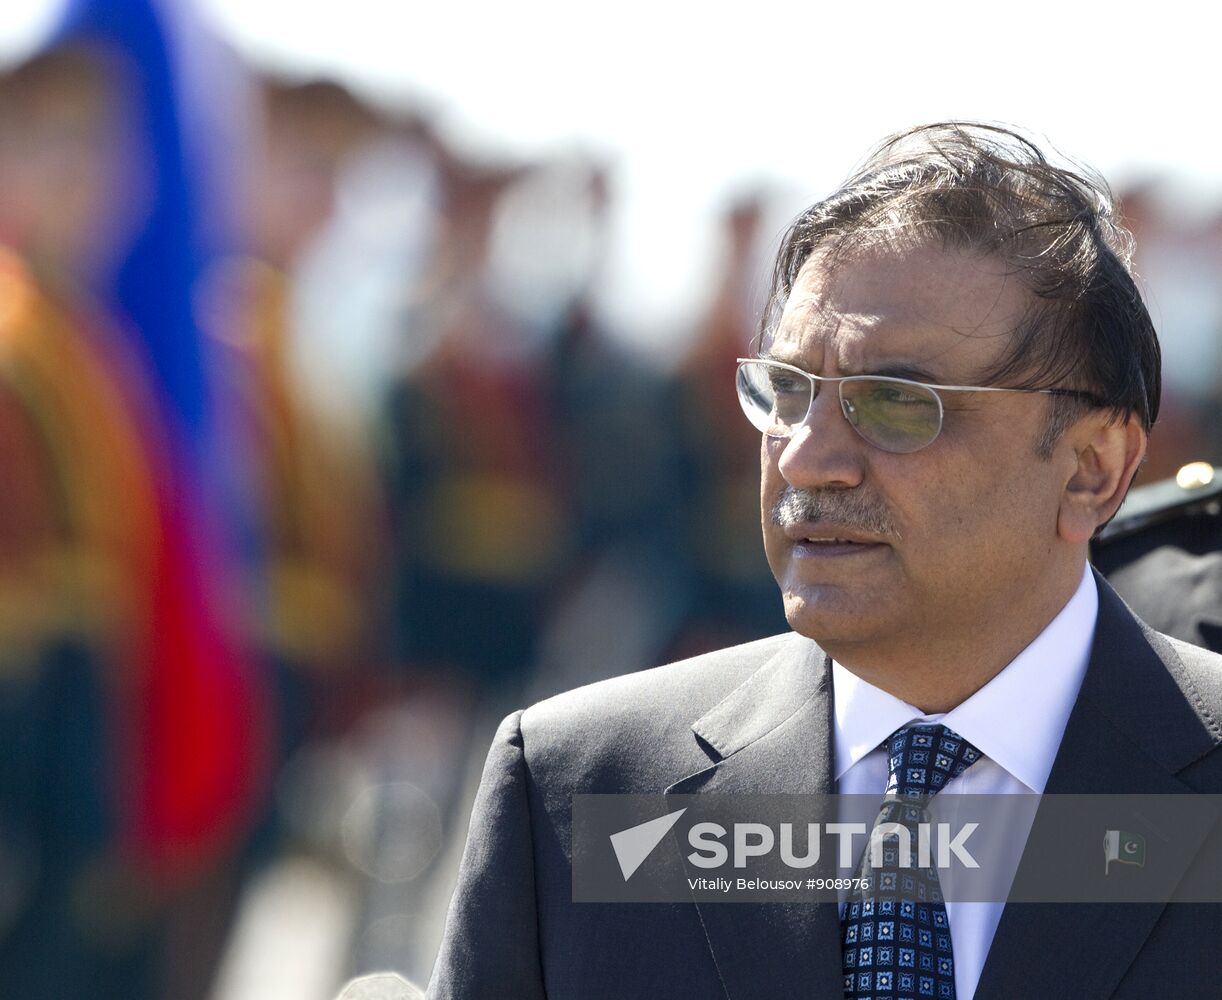 Pakistani President Asif Ali Zardari arrives in Moscow